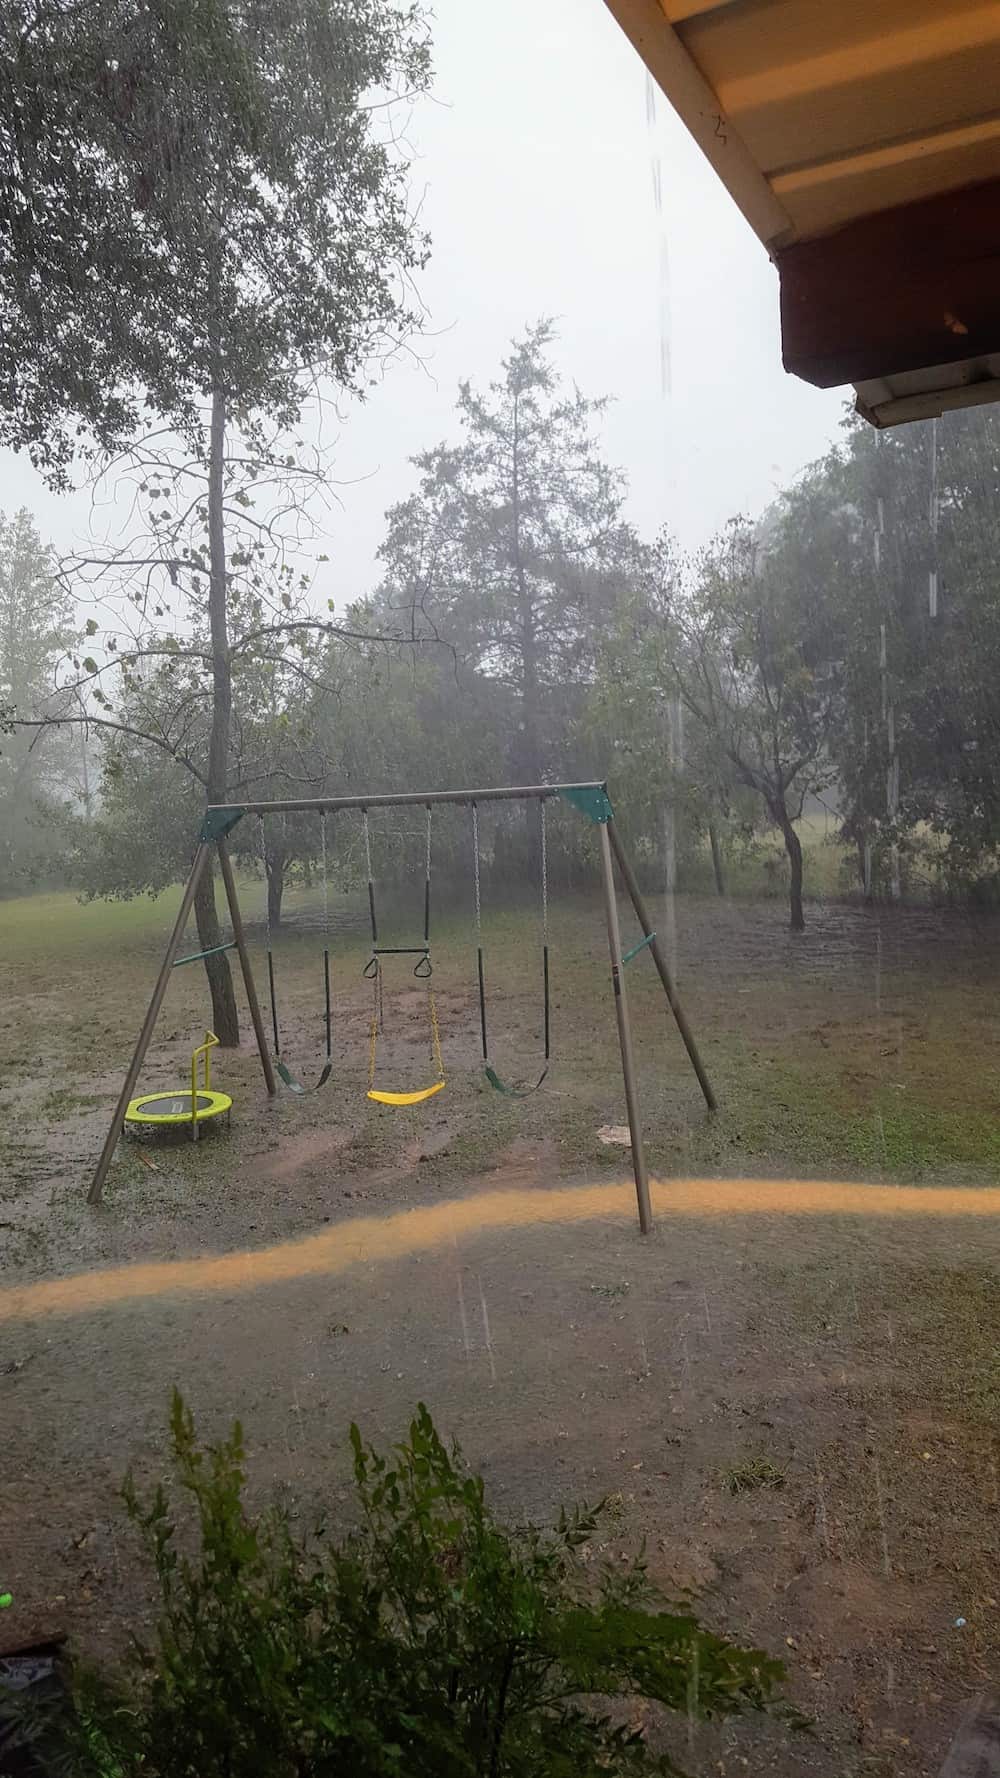 Heavy rain causing flooding in the yard.